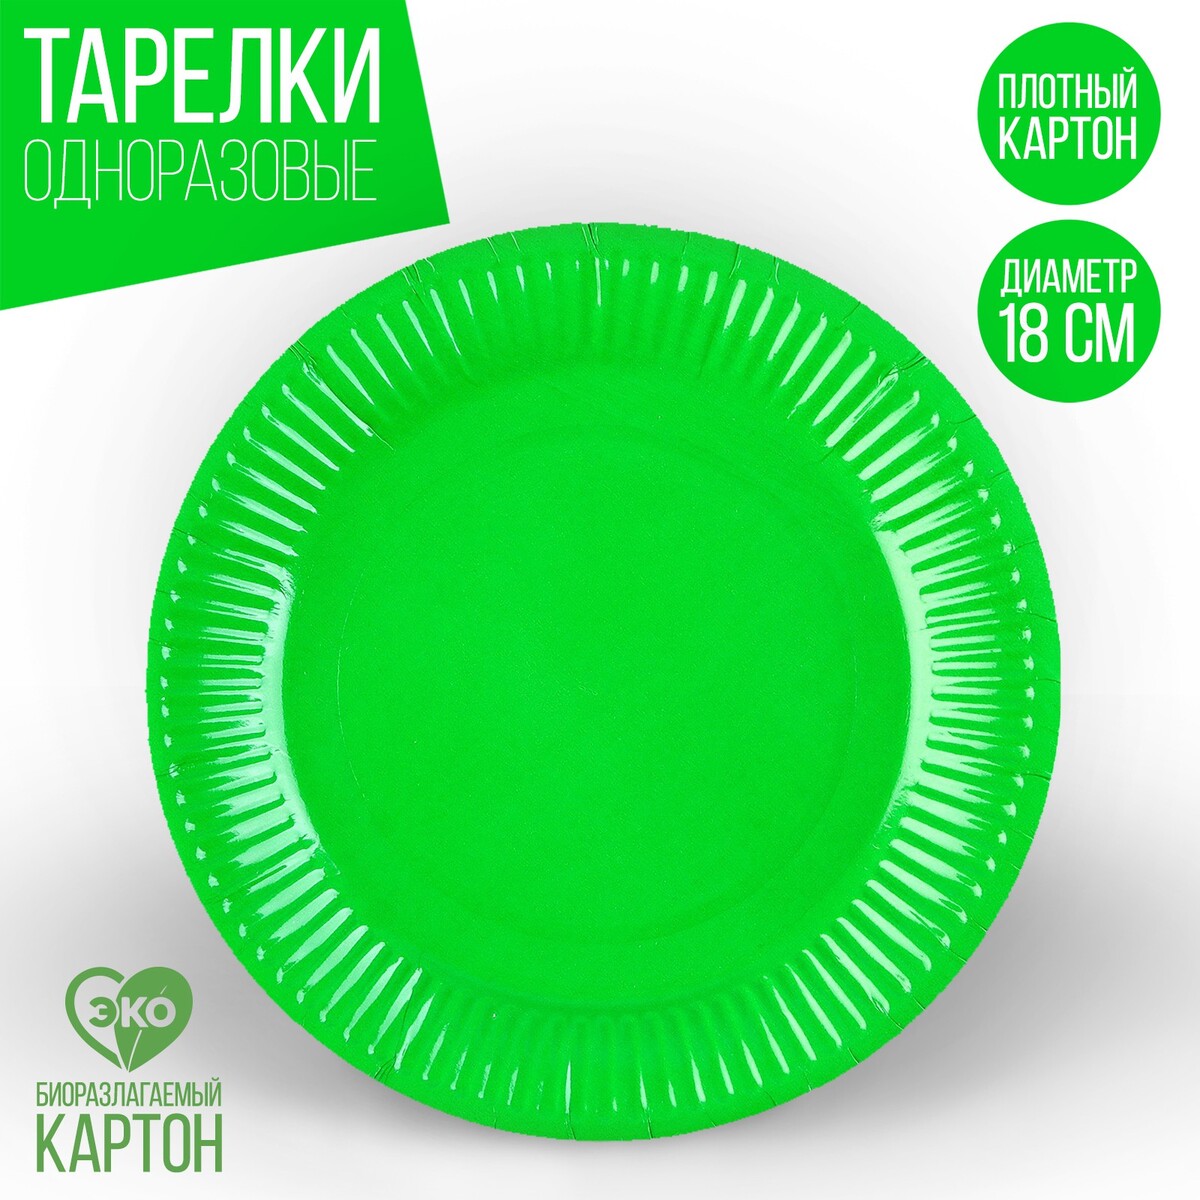 Тарелка одноразовая бумажная однотонная, зеленый цвет 18 см, набор 10 штук тарелка одноразовая бумажная однотонная голубой 18 см набор 10 штук